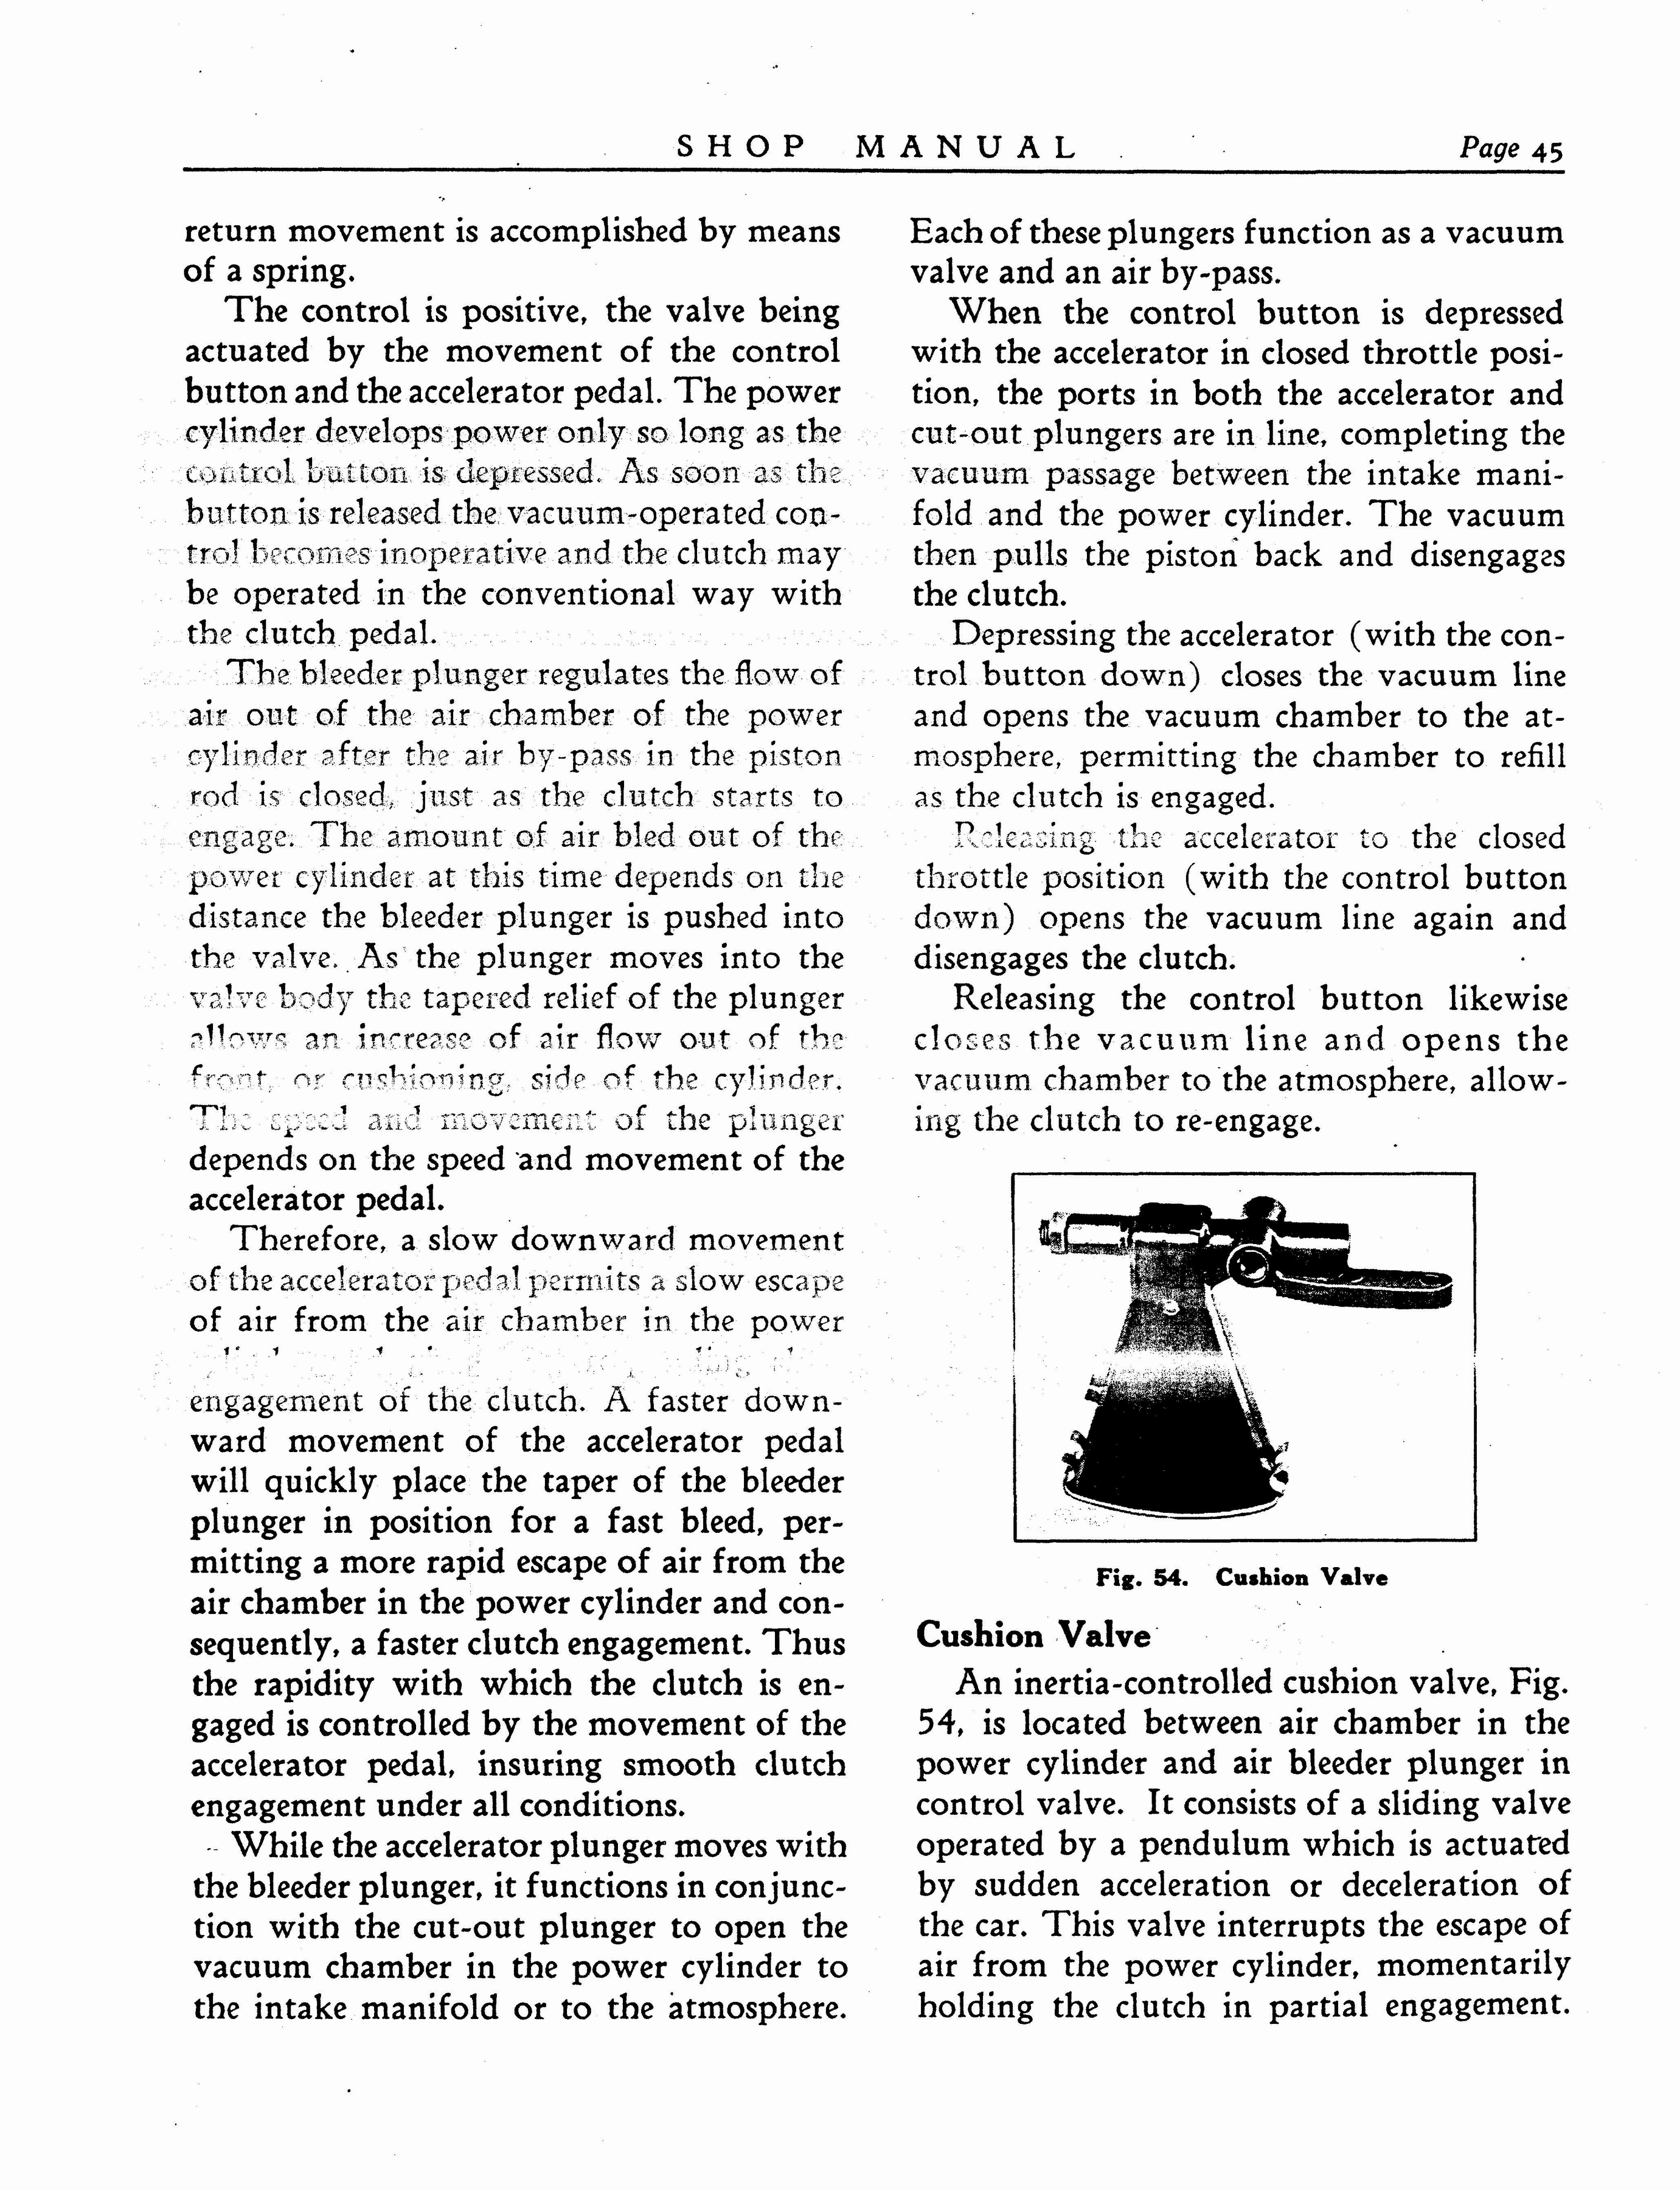 n_1933 Buick Shop Manual_Page_046.jpg